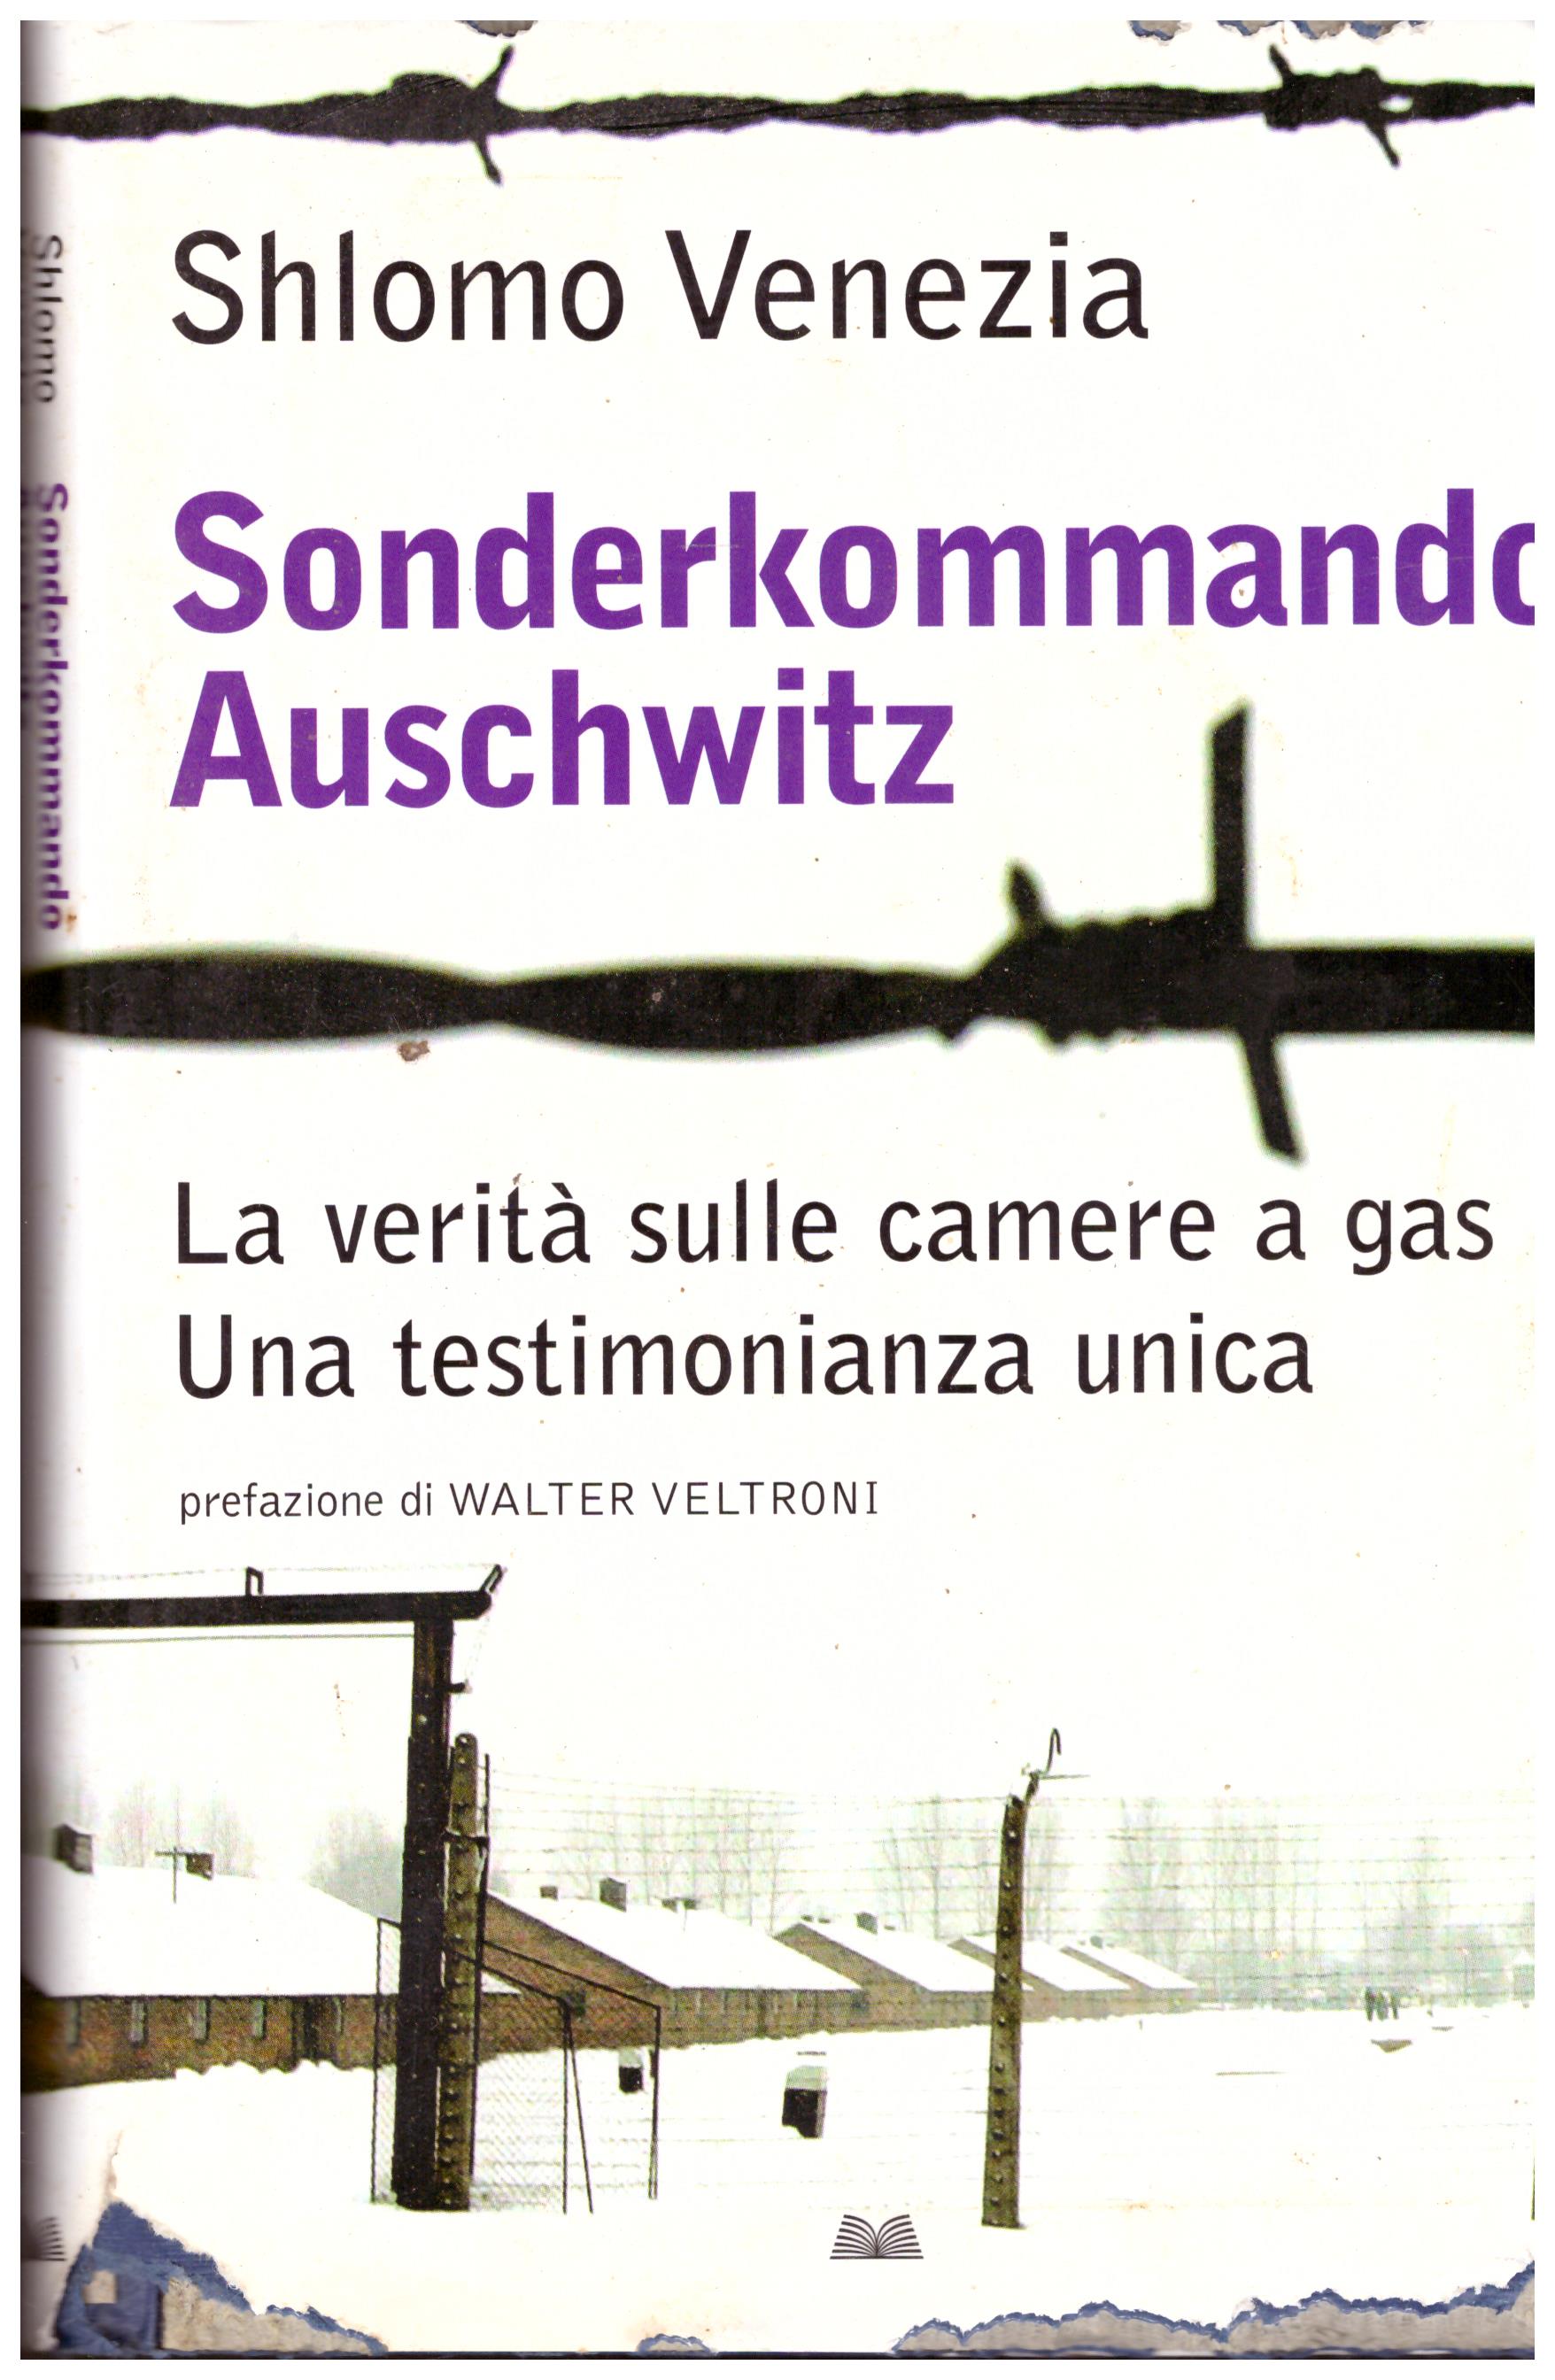 Titolo: Sonderkommando Auschwitz Autore: Shlomo Venezia Editore: Mondadori, 2007